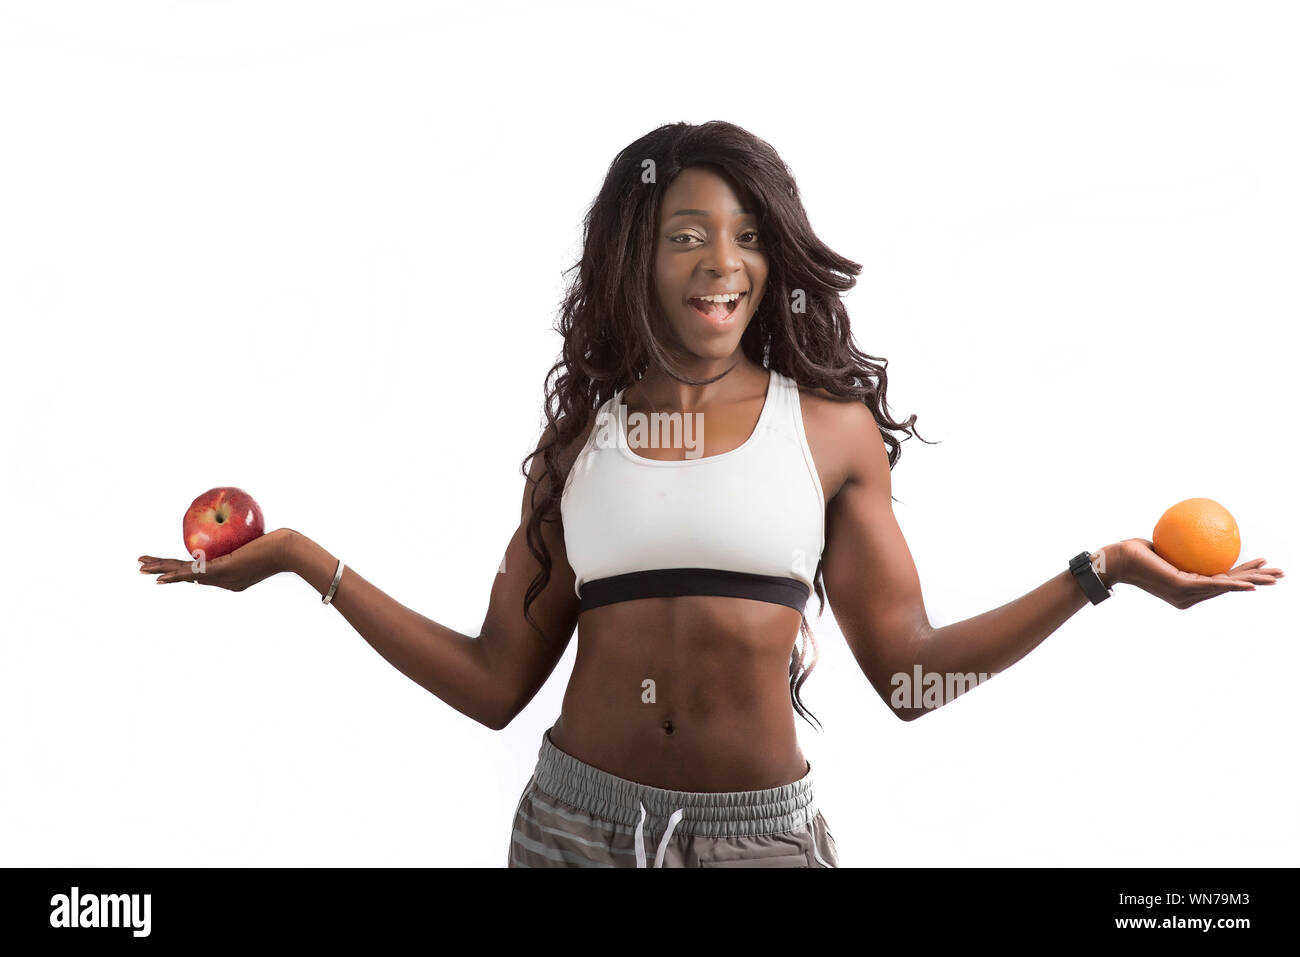 Portrait Of Happy Model Holding Apple And Orange Fruit Against White Background Stock Photo